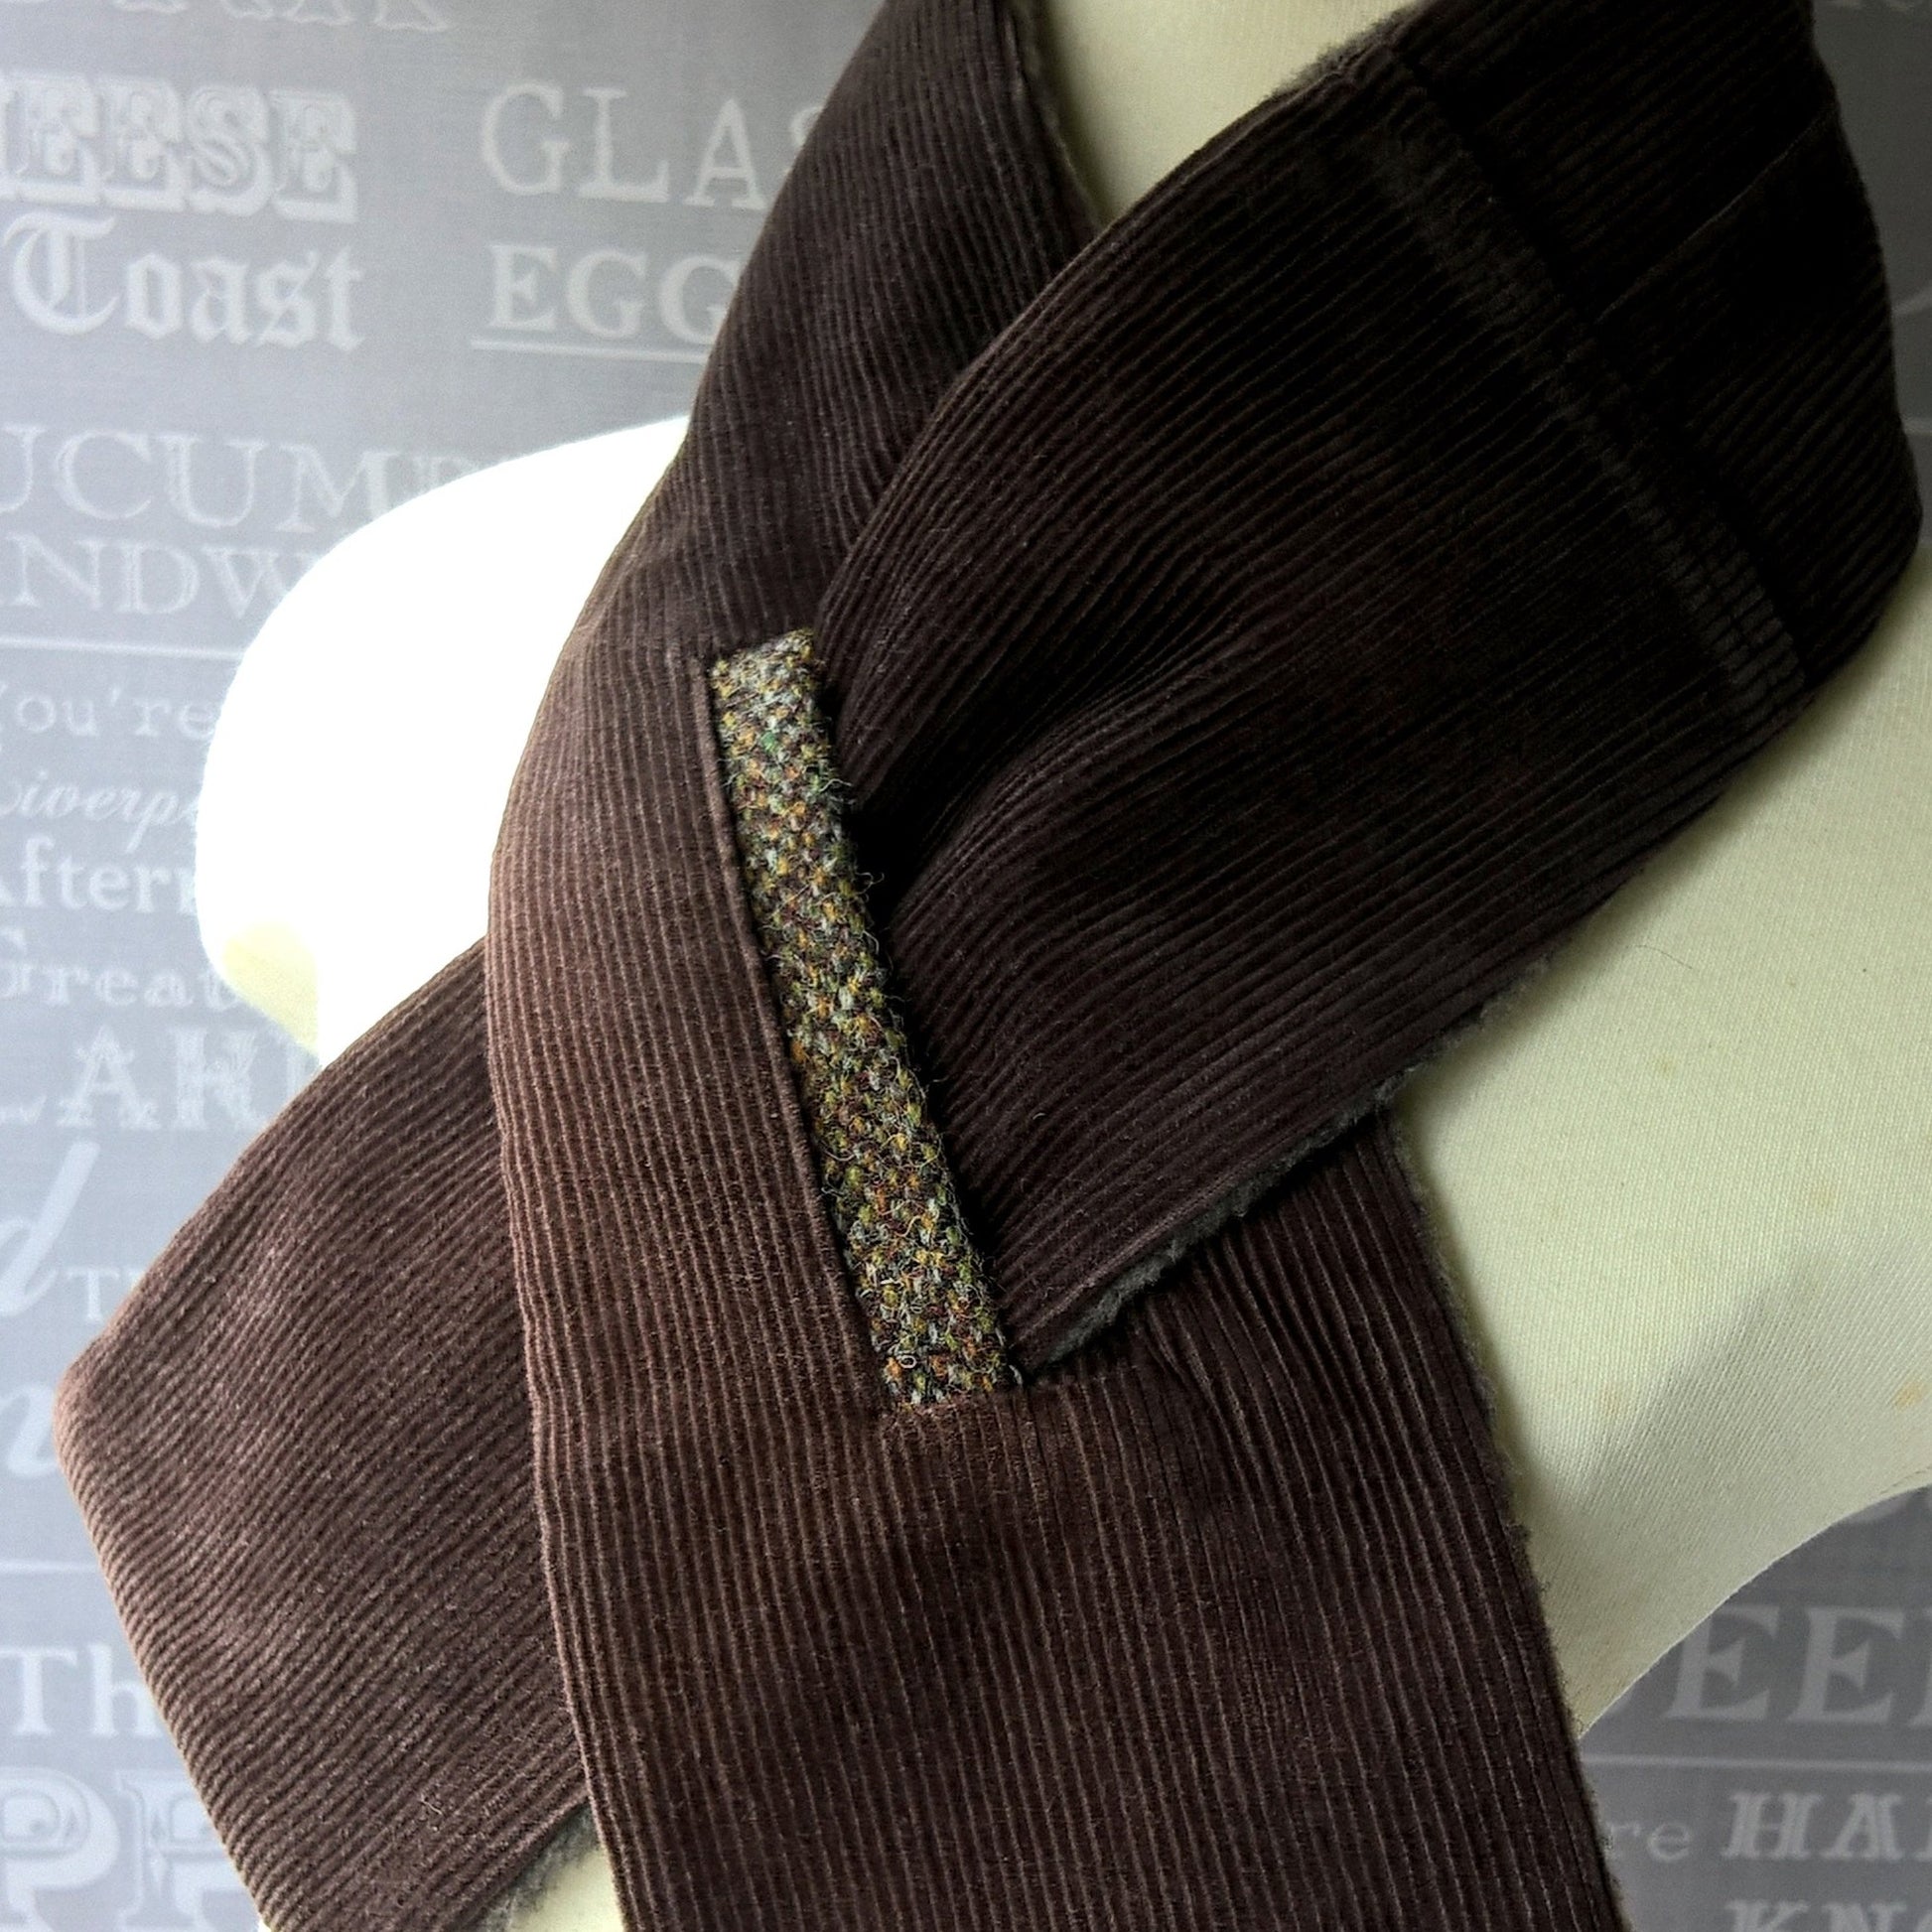 Upcycled brown corduroy and marl fleece neck warmer with harris tweed trim